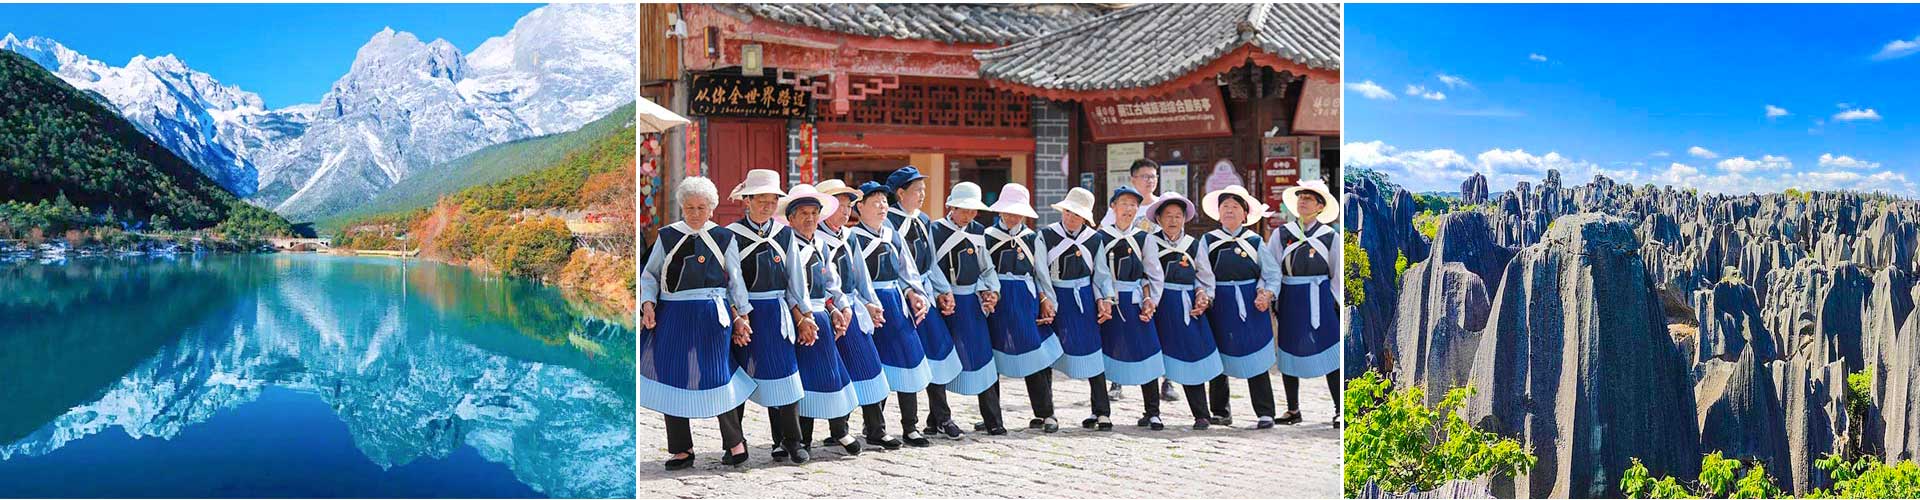 Kunming Lijiang Tours